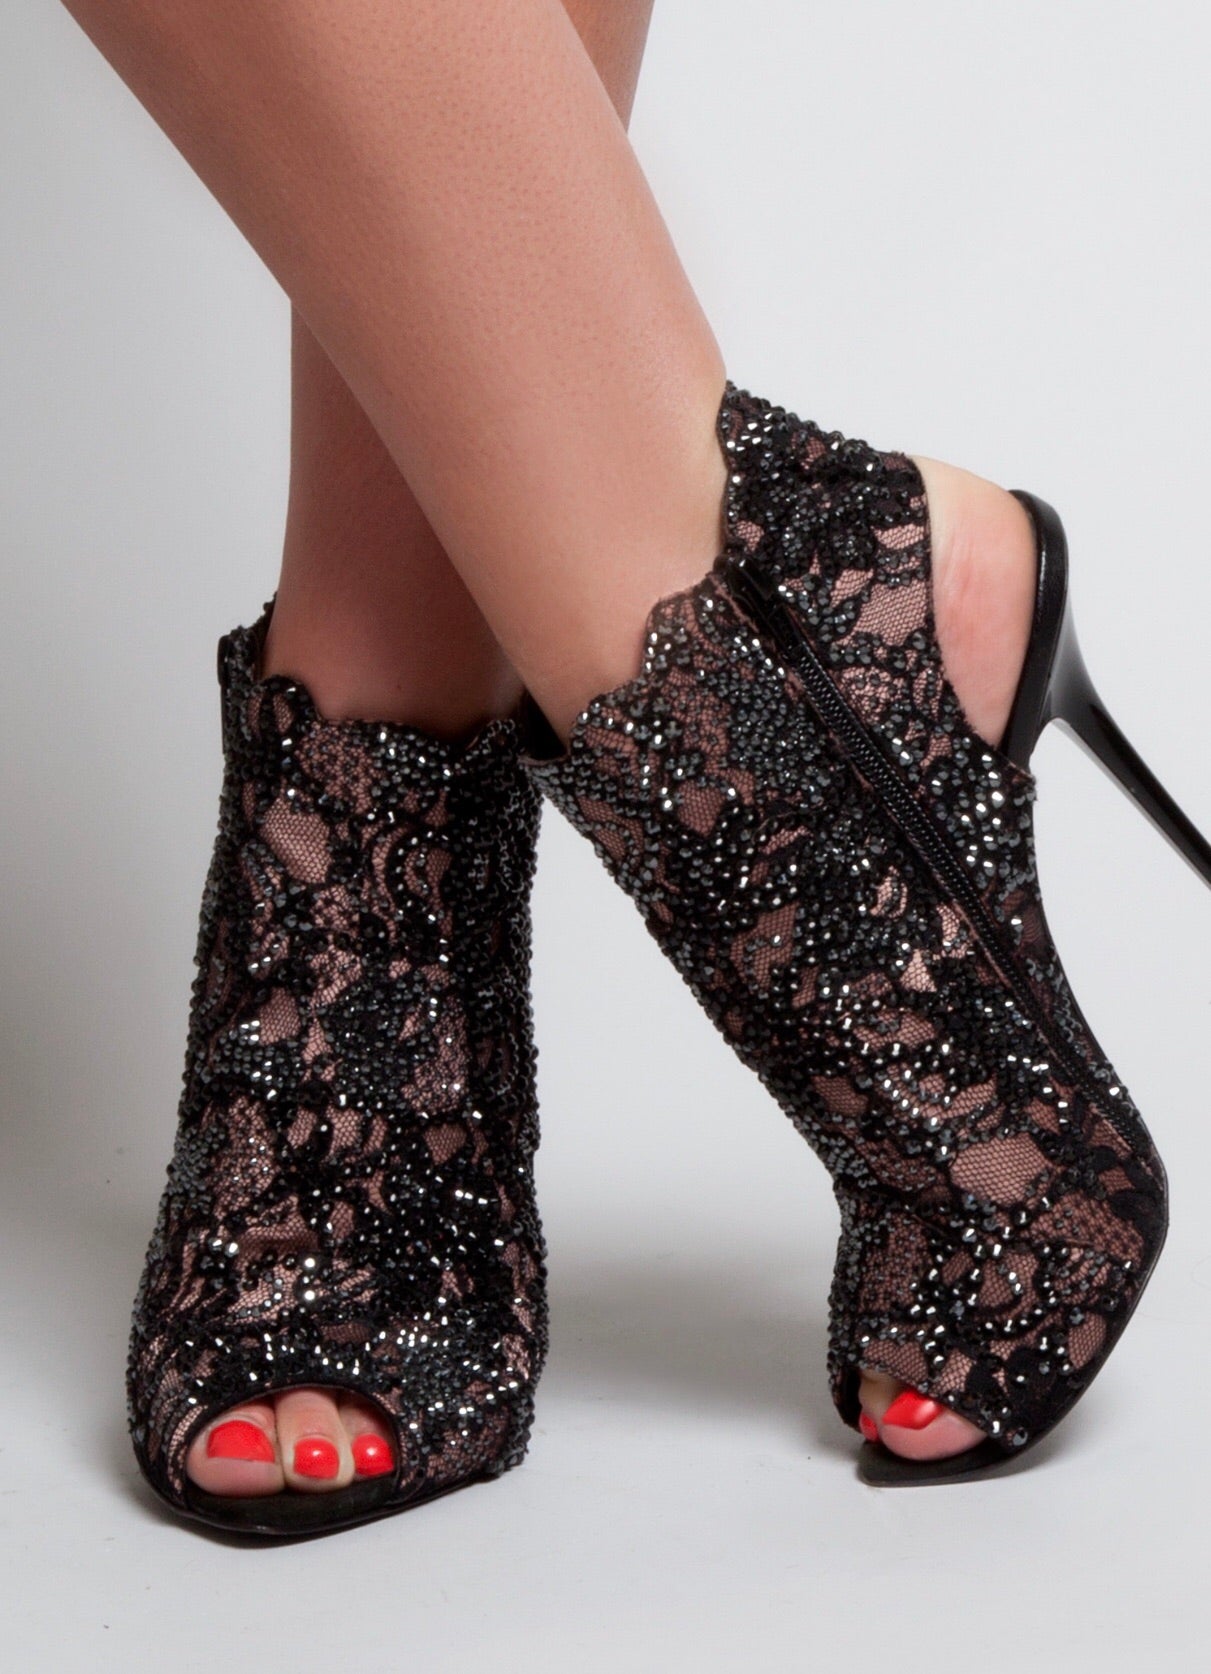 Lace boots peep toe - Claudio Milano Couture 